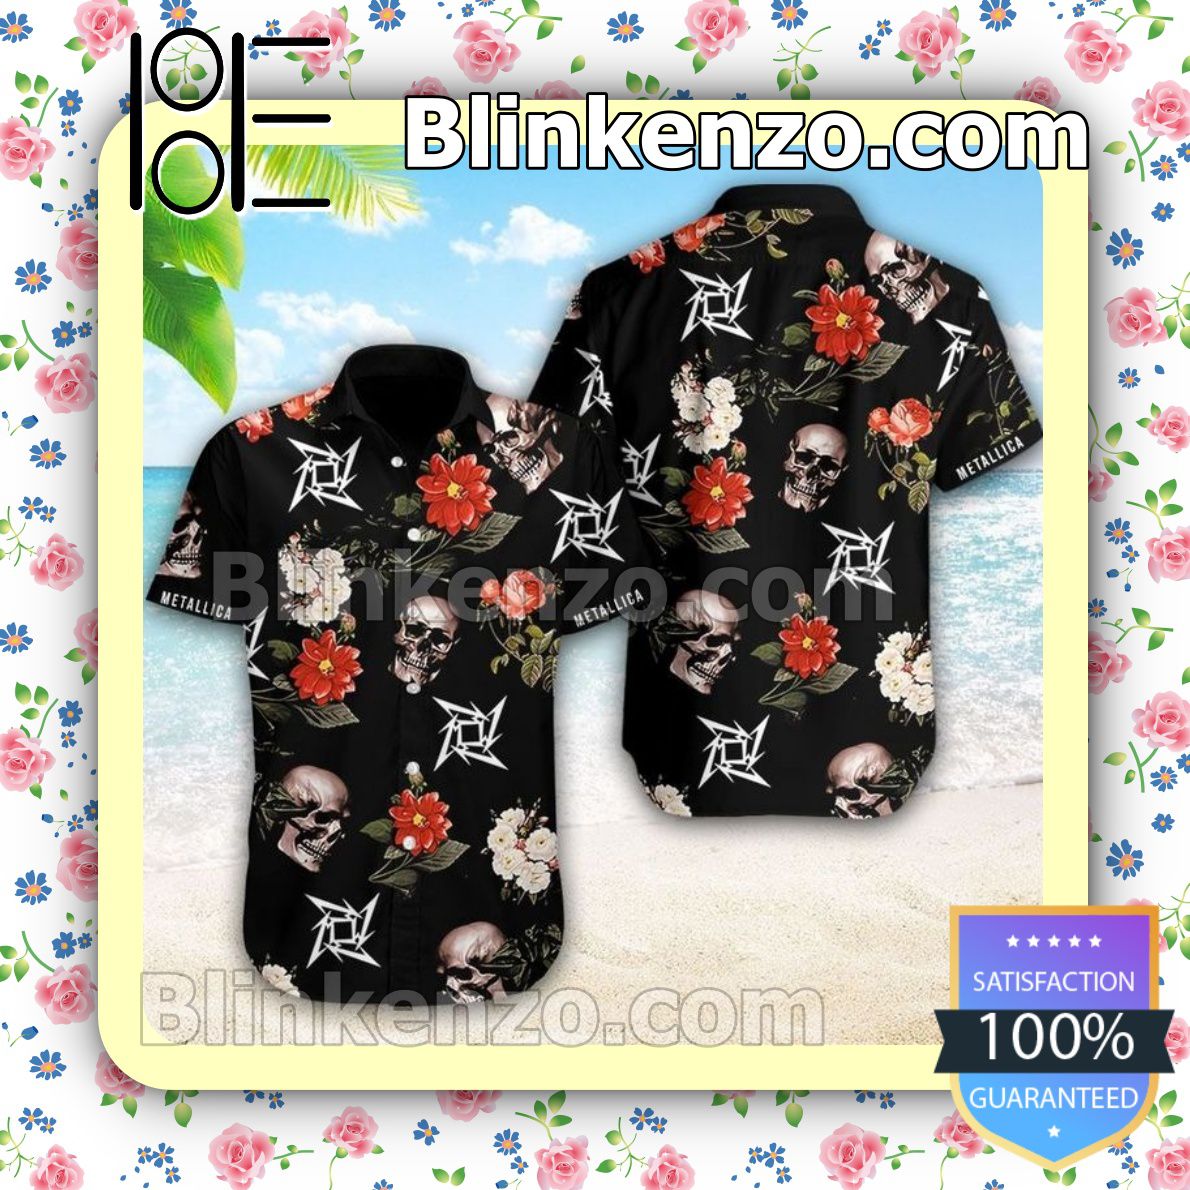 Metallica Skull Flowers Black Summer Shirts